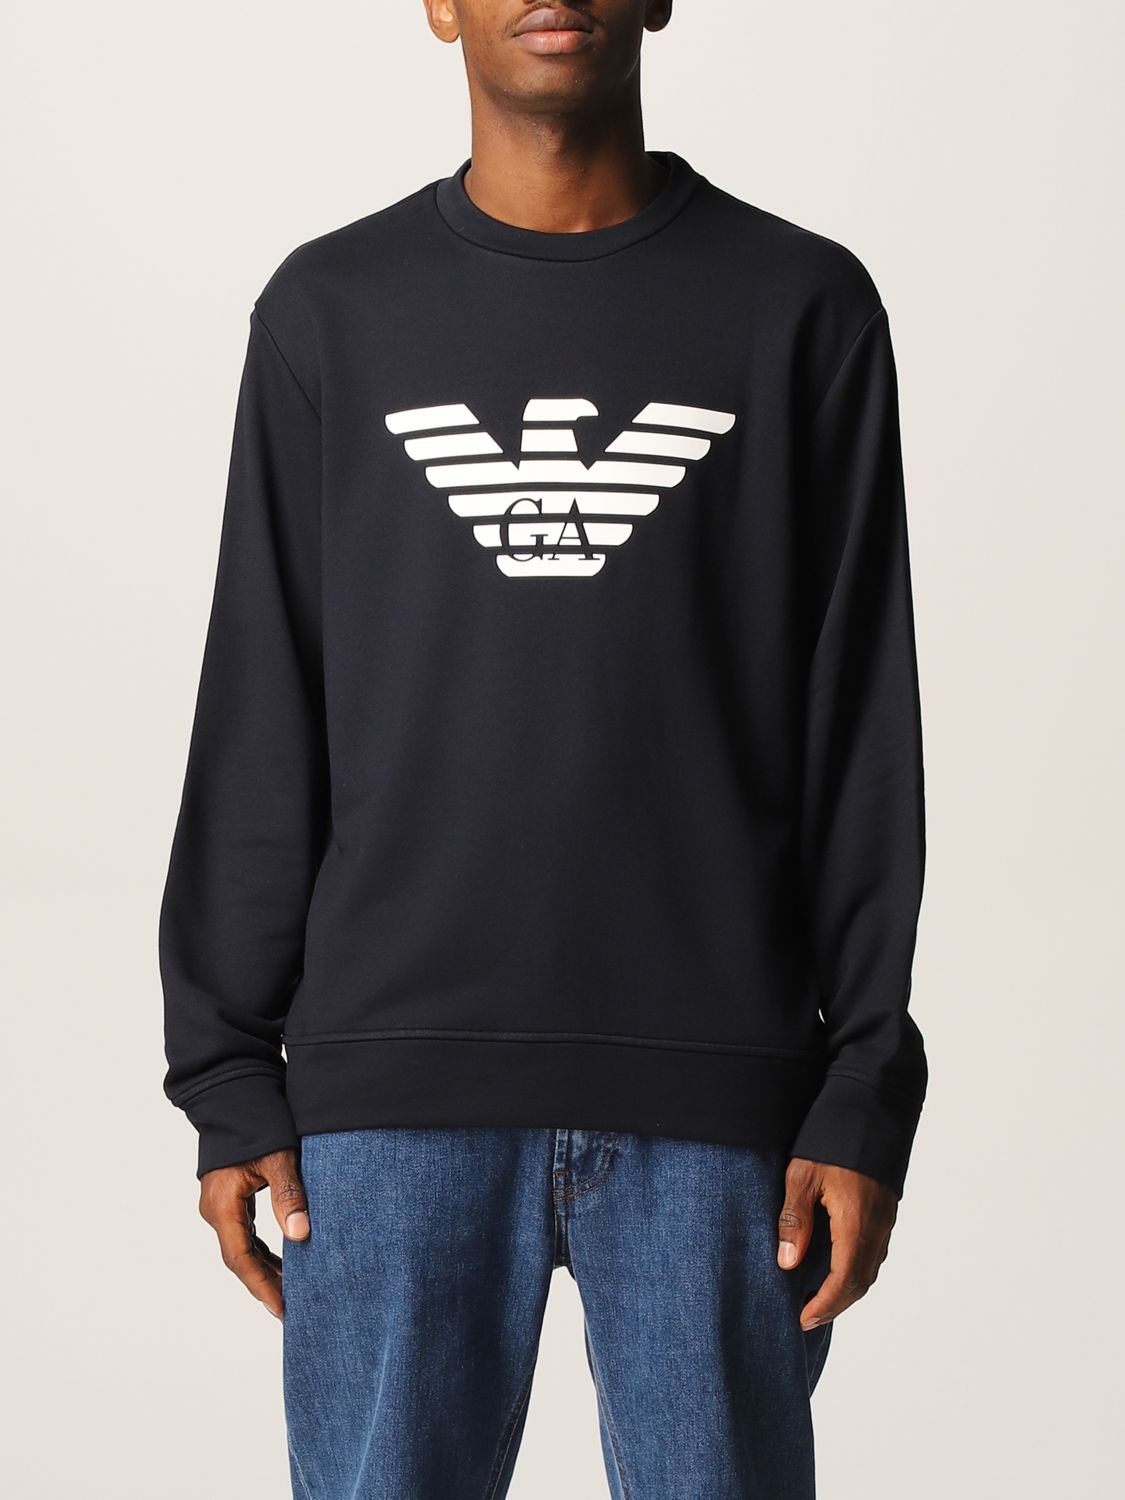 Emporio Armani sweatshirt in cotton blend with logo